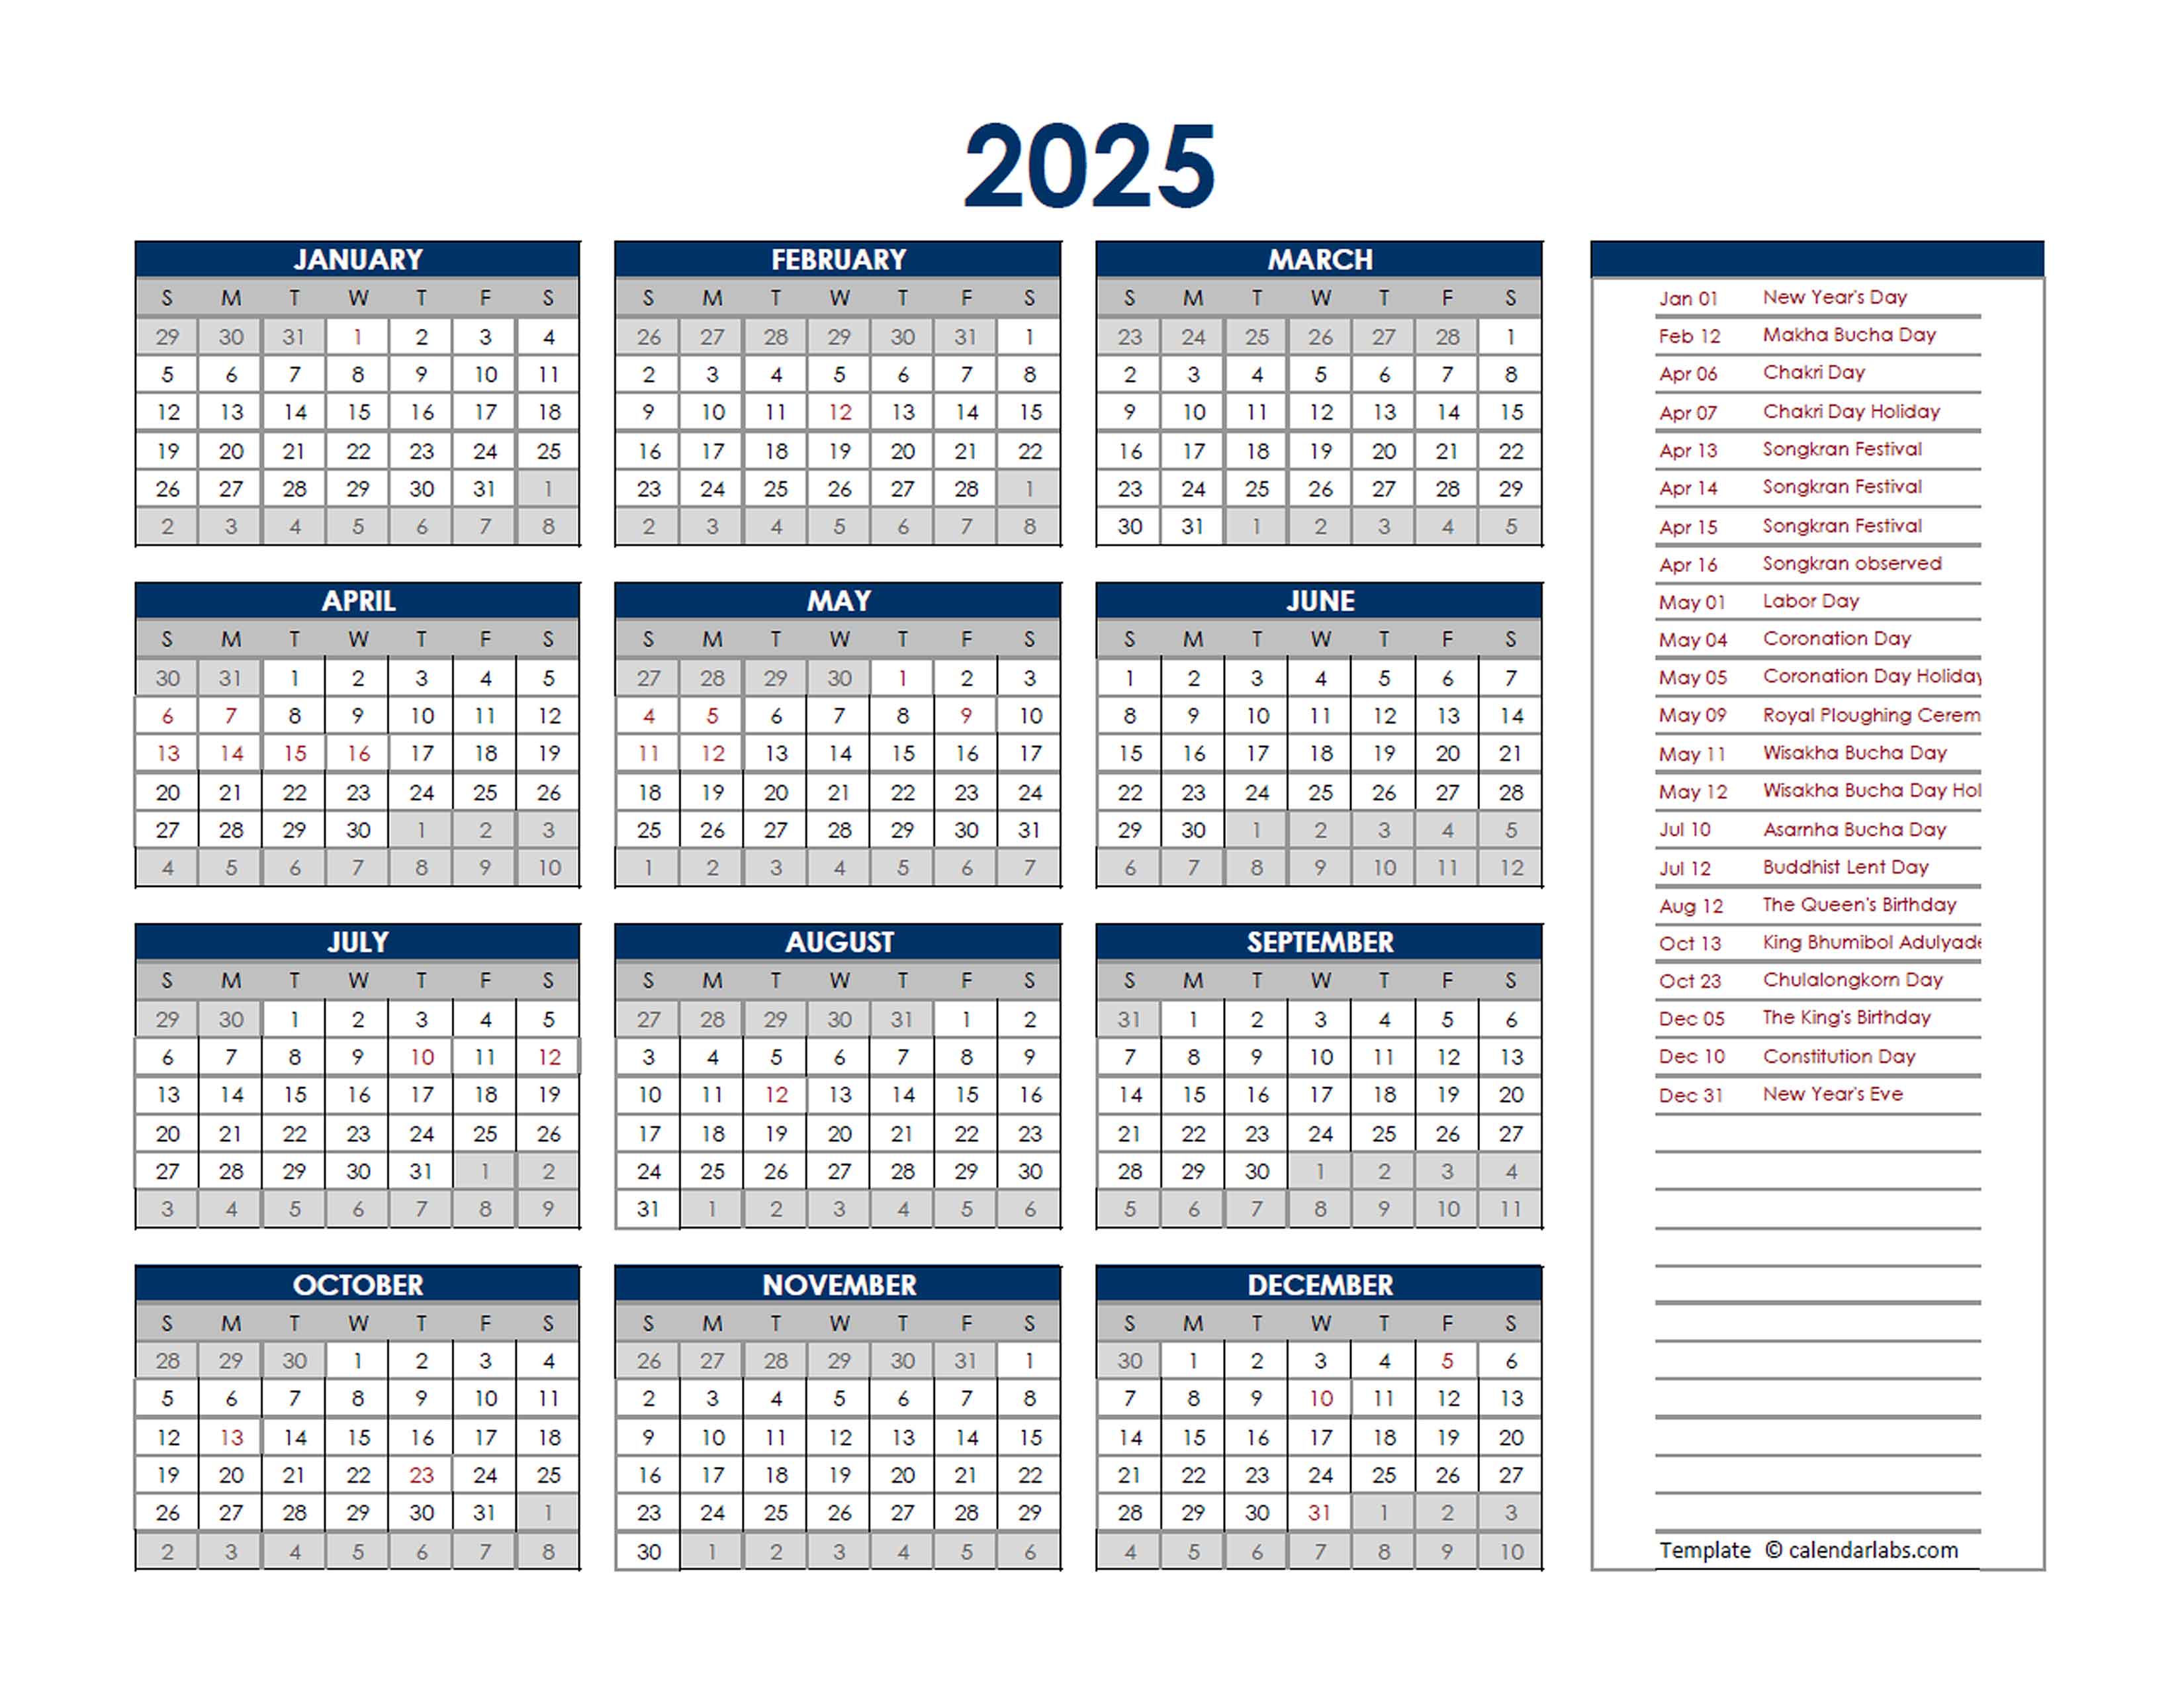 2025 Thailand Annual Calendar with Holidays - Free Printable Templates